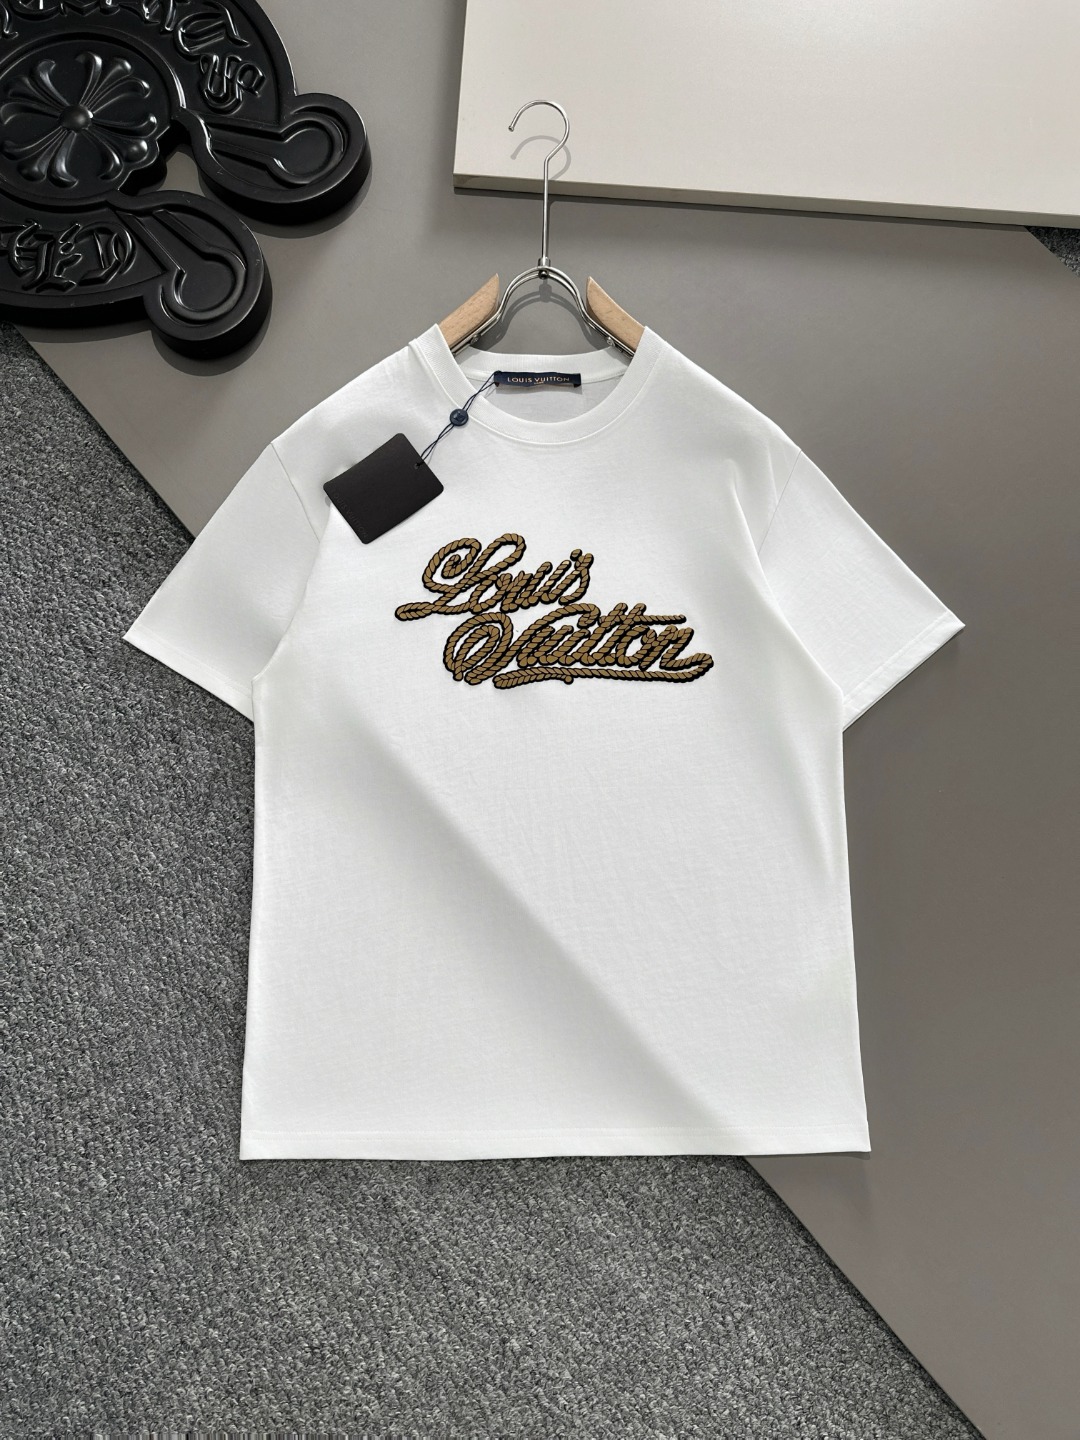 AAA+
 Louis Vuitton Kleding T-Shirt Zwart Wit Katoen Lente/Zomercollectie Fashion Korte mouw